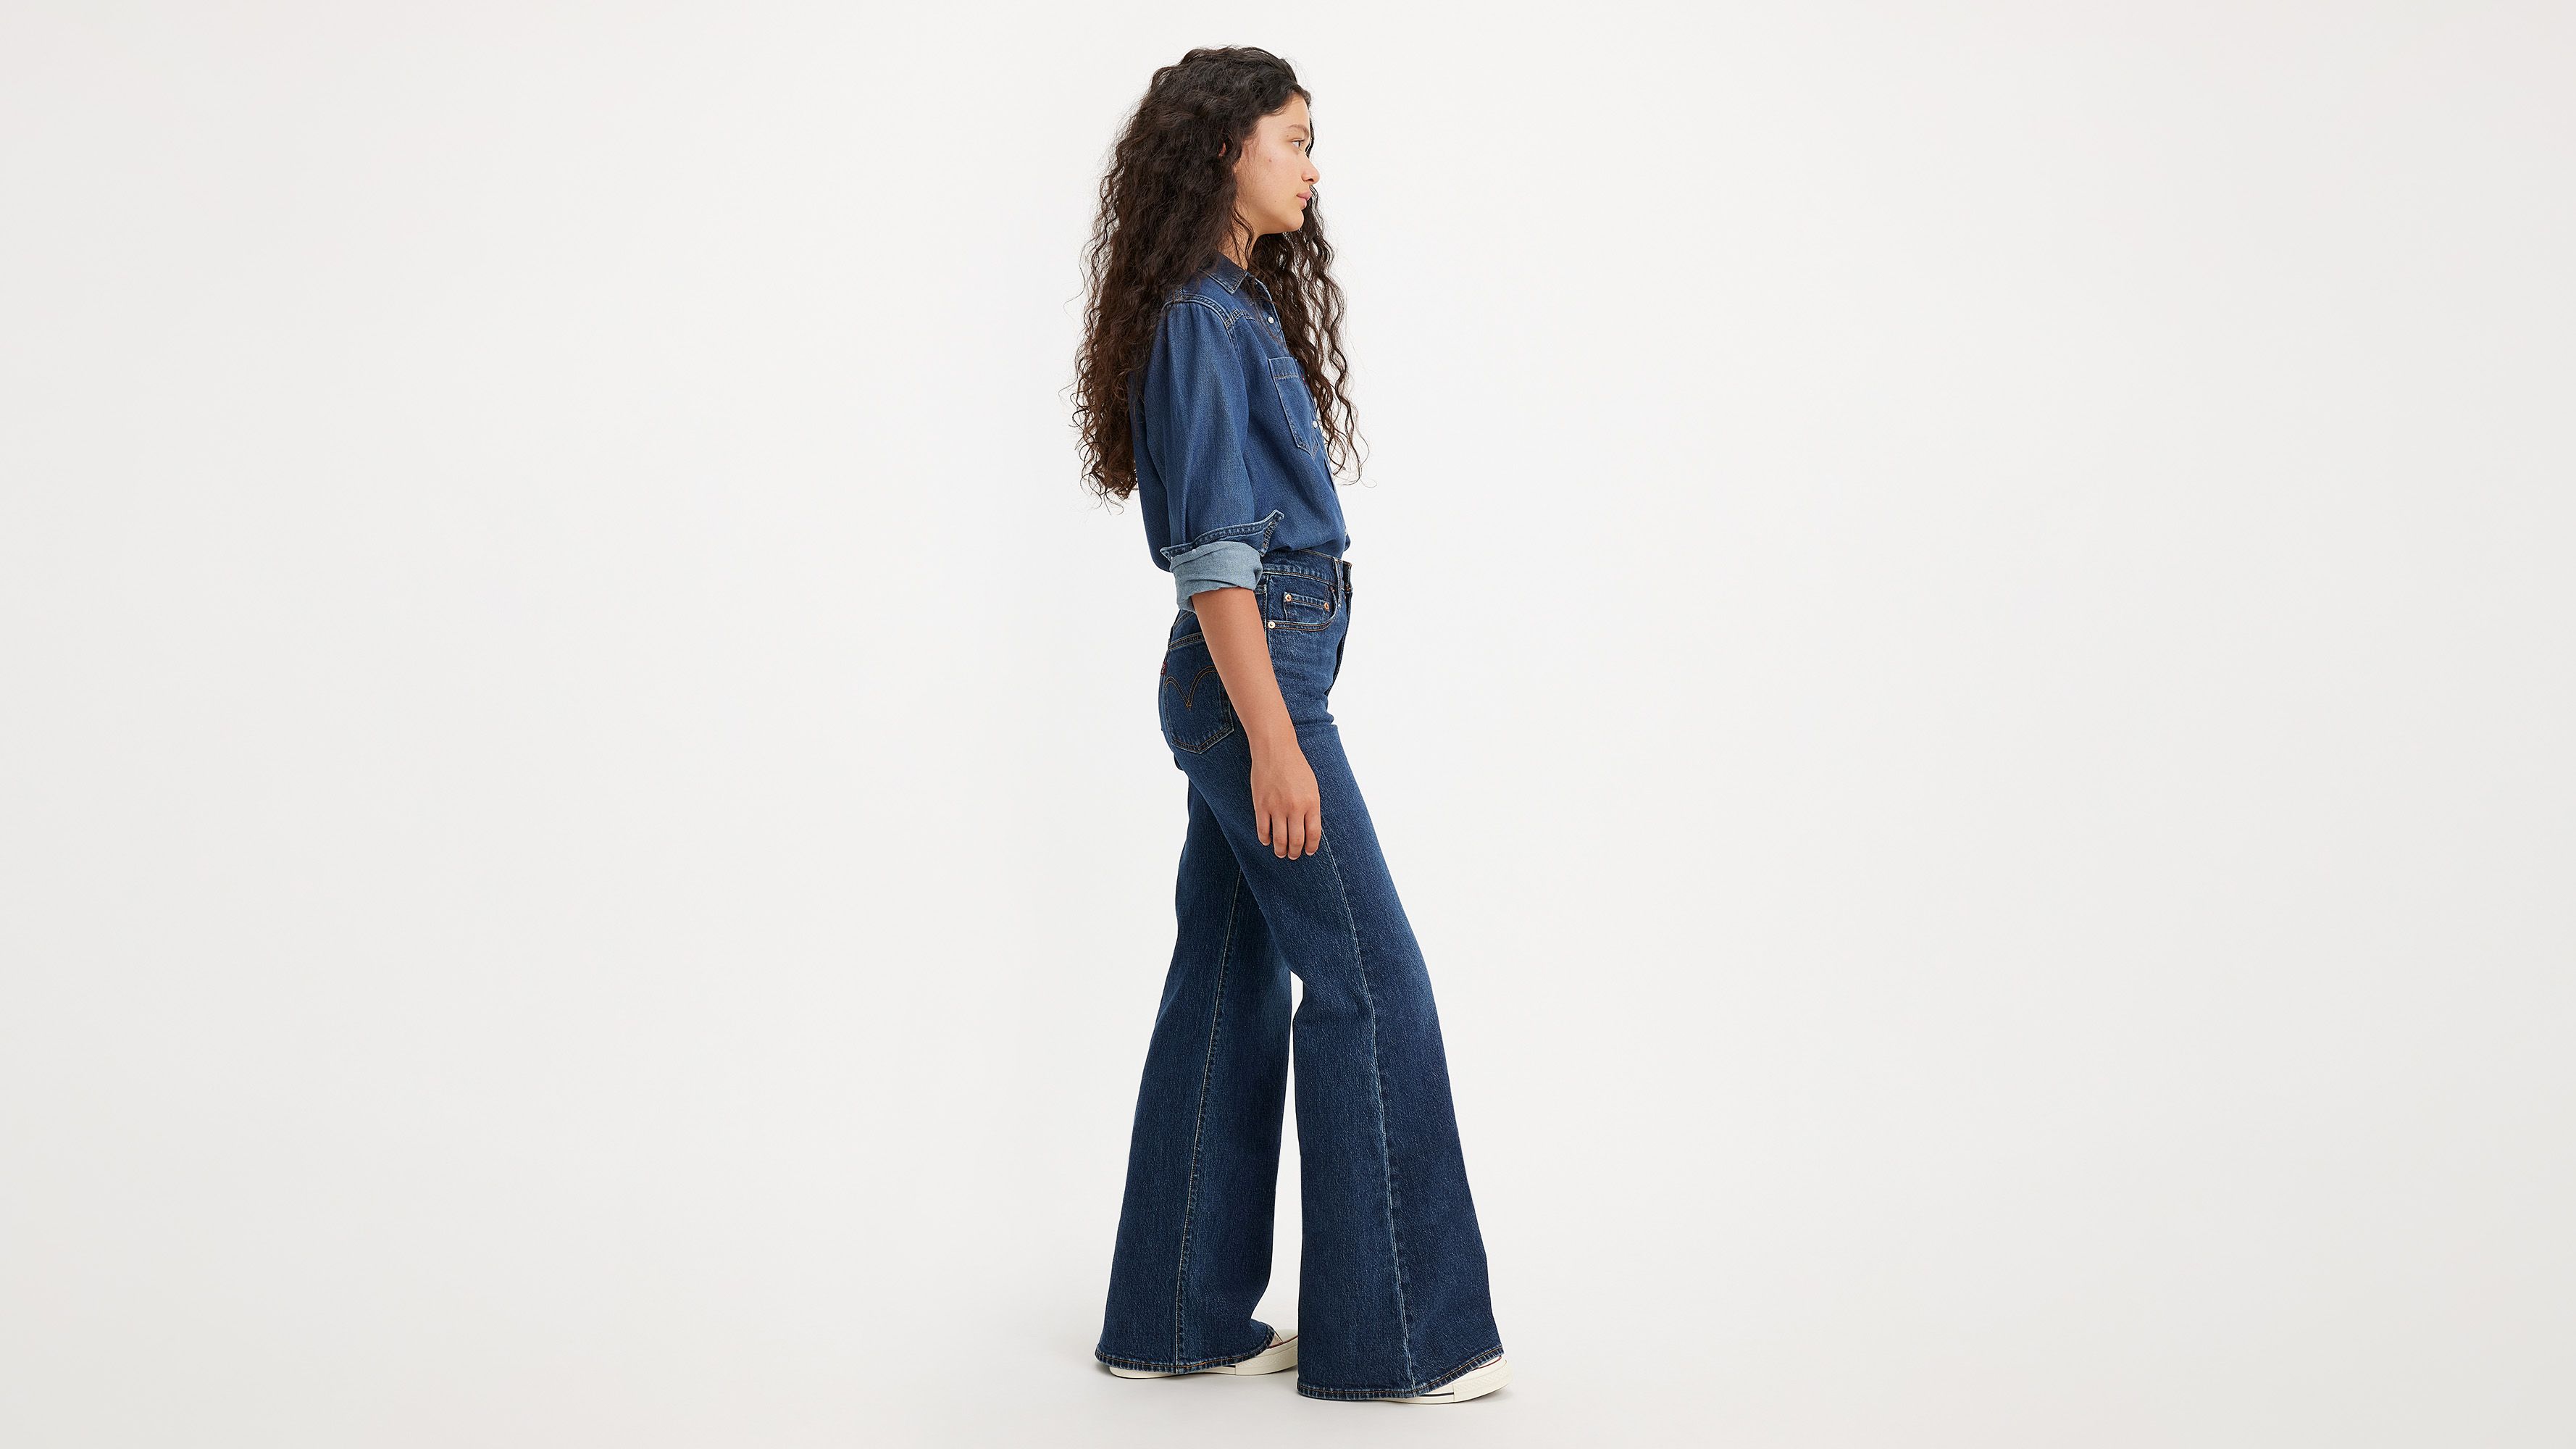 Levi's® Flared jeans RIBCAGE BELL in 09 dark indigo - worn in